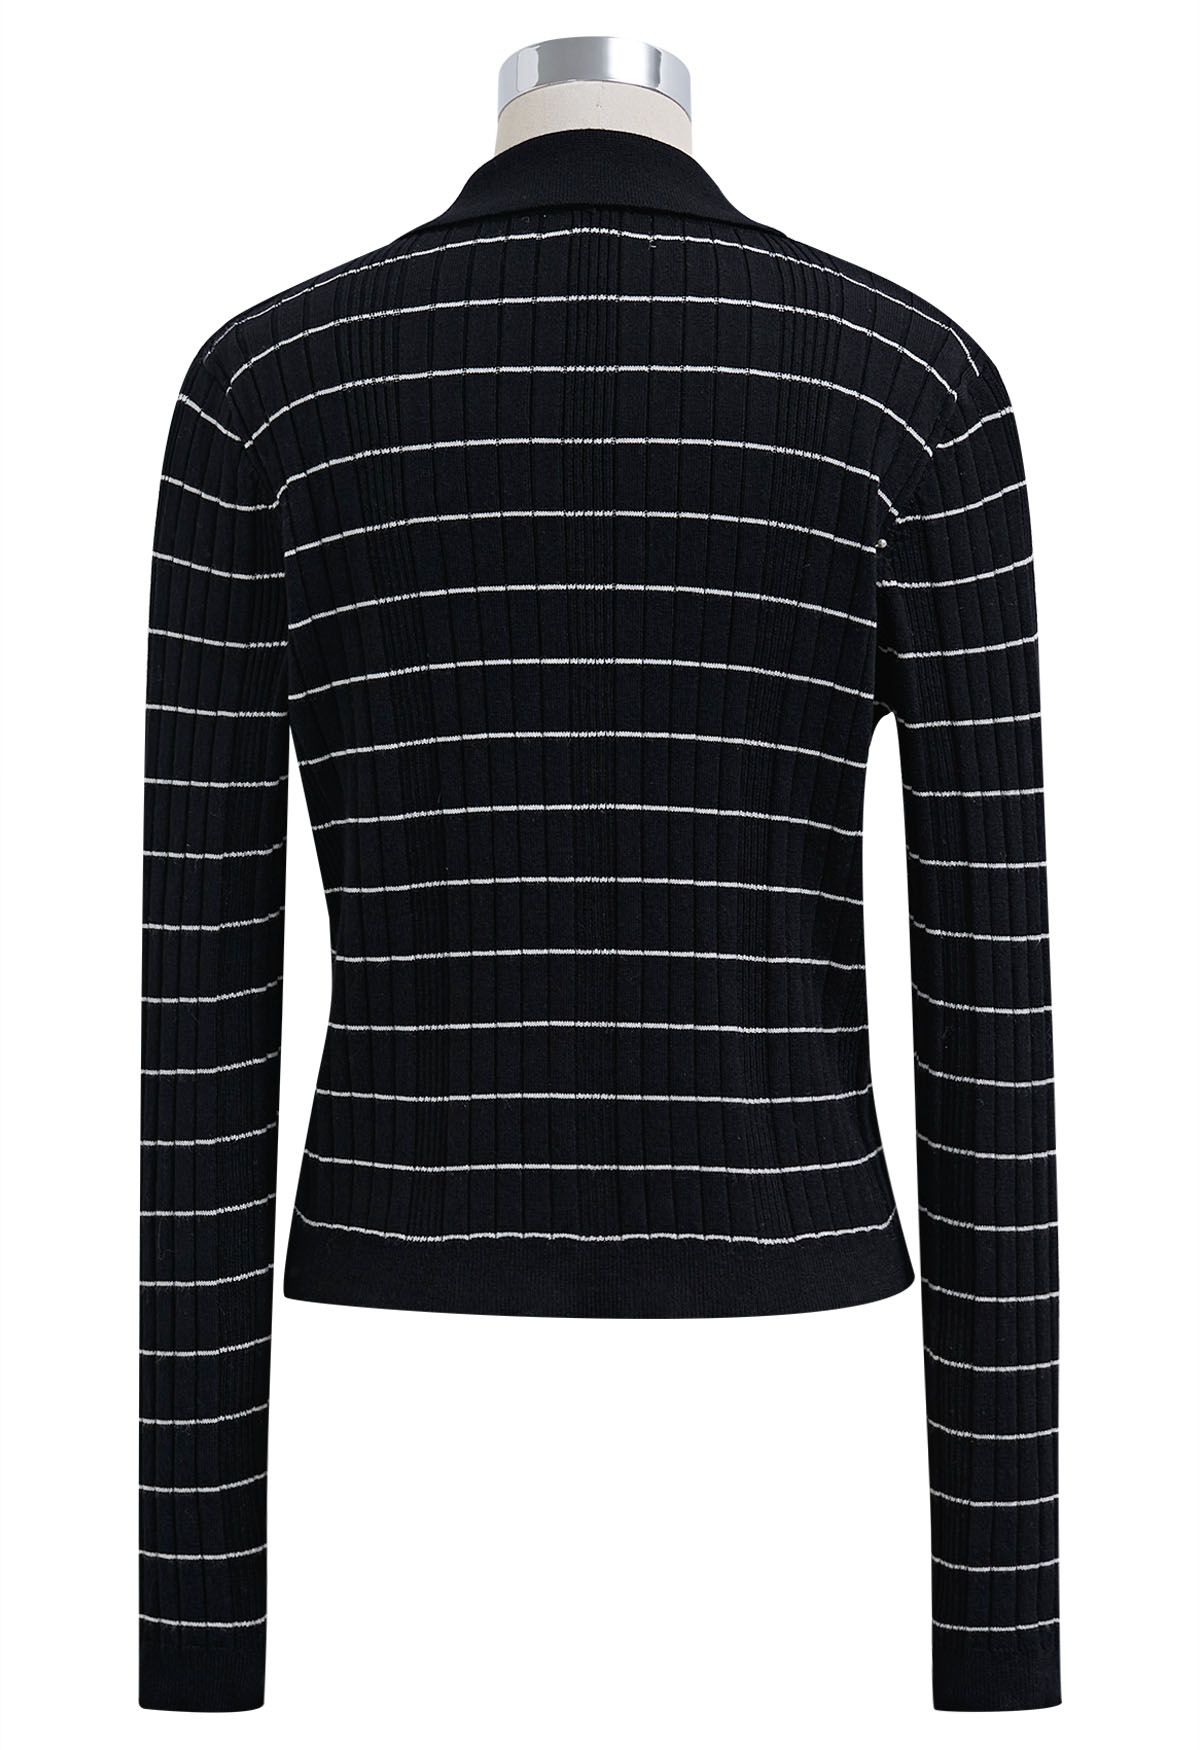 Turn-Down Collar Striped Knit Cardigan in Black